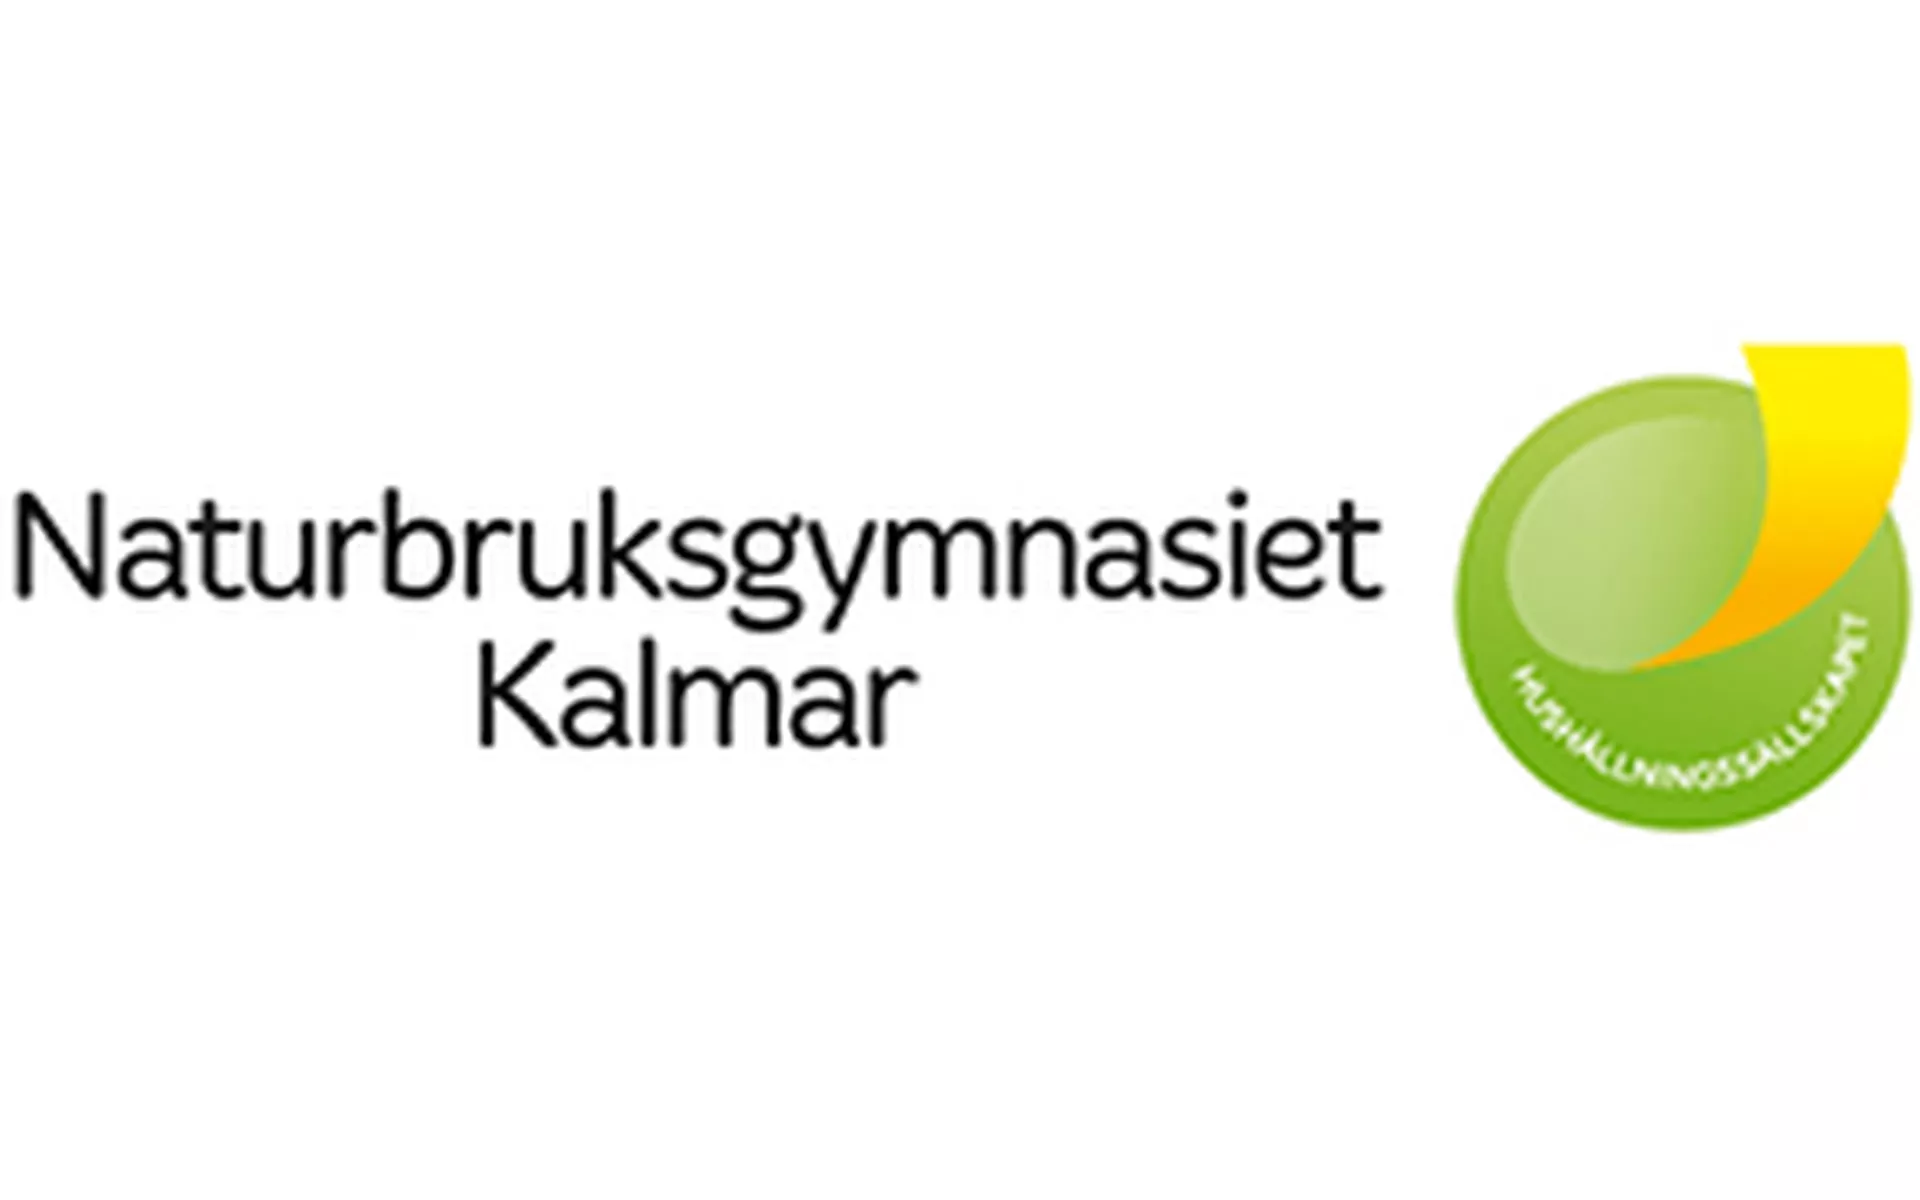 Naturbruksgymnasiet Kalmar